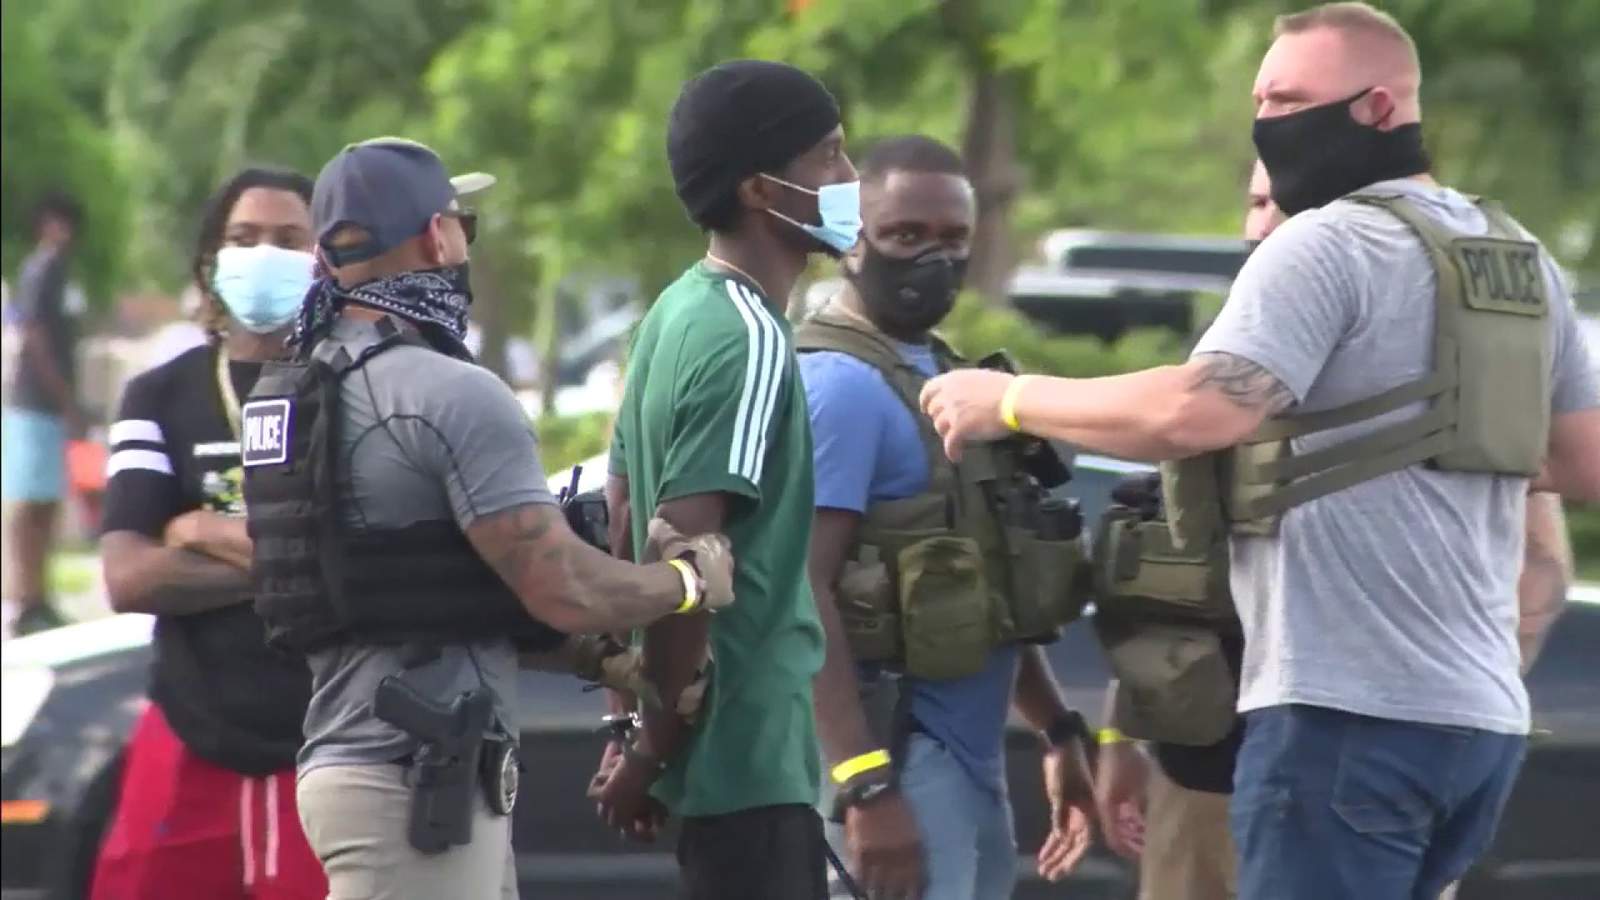 Gunfight leaves 5 men injured in Miami Gardens